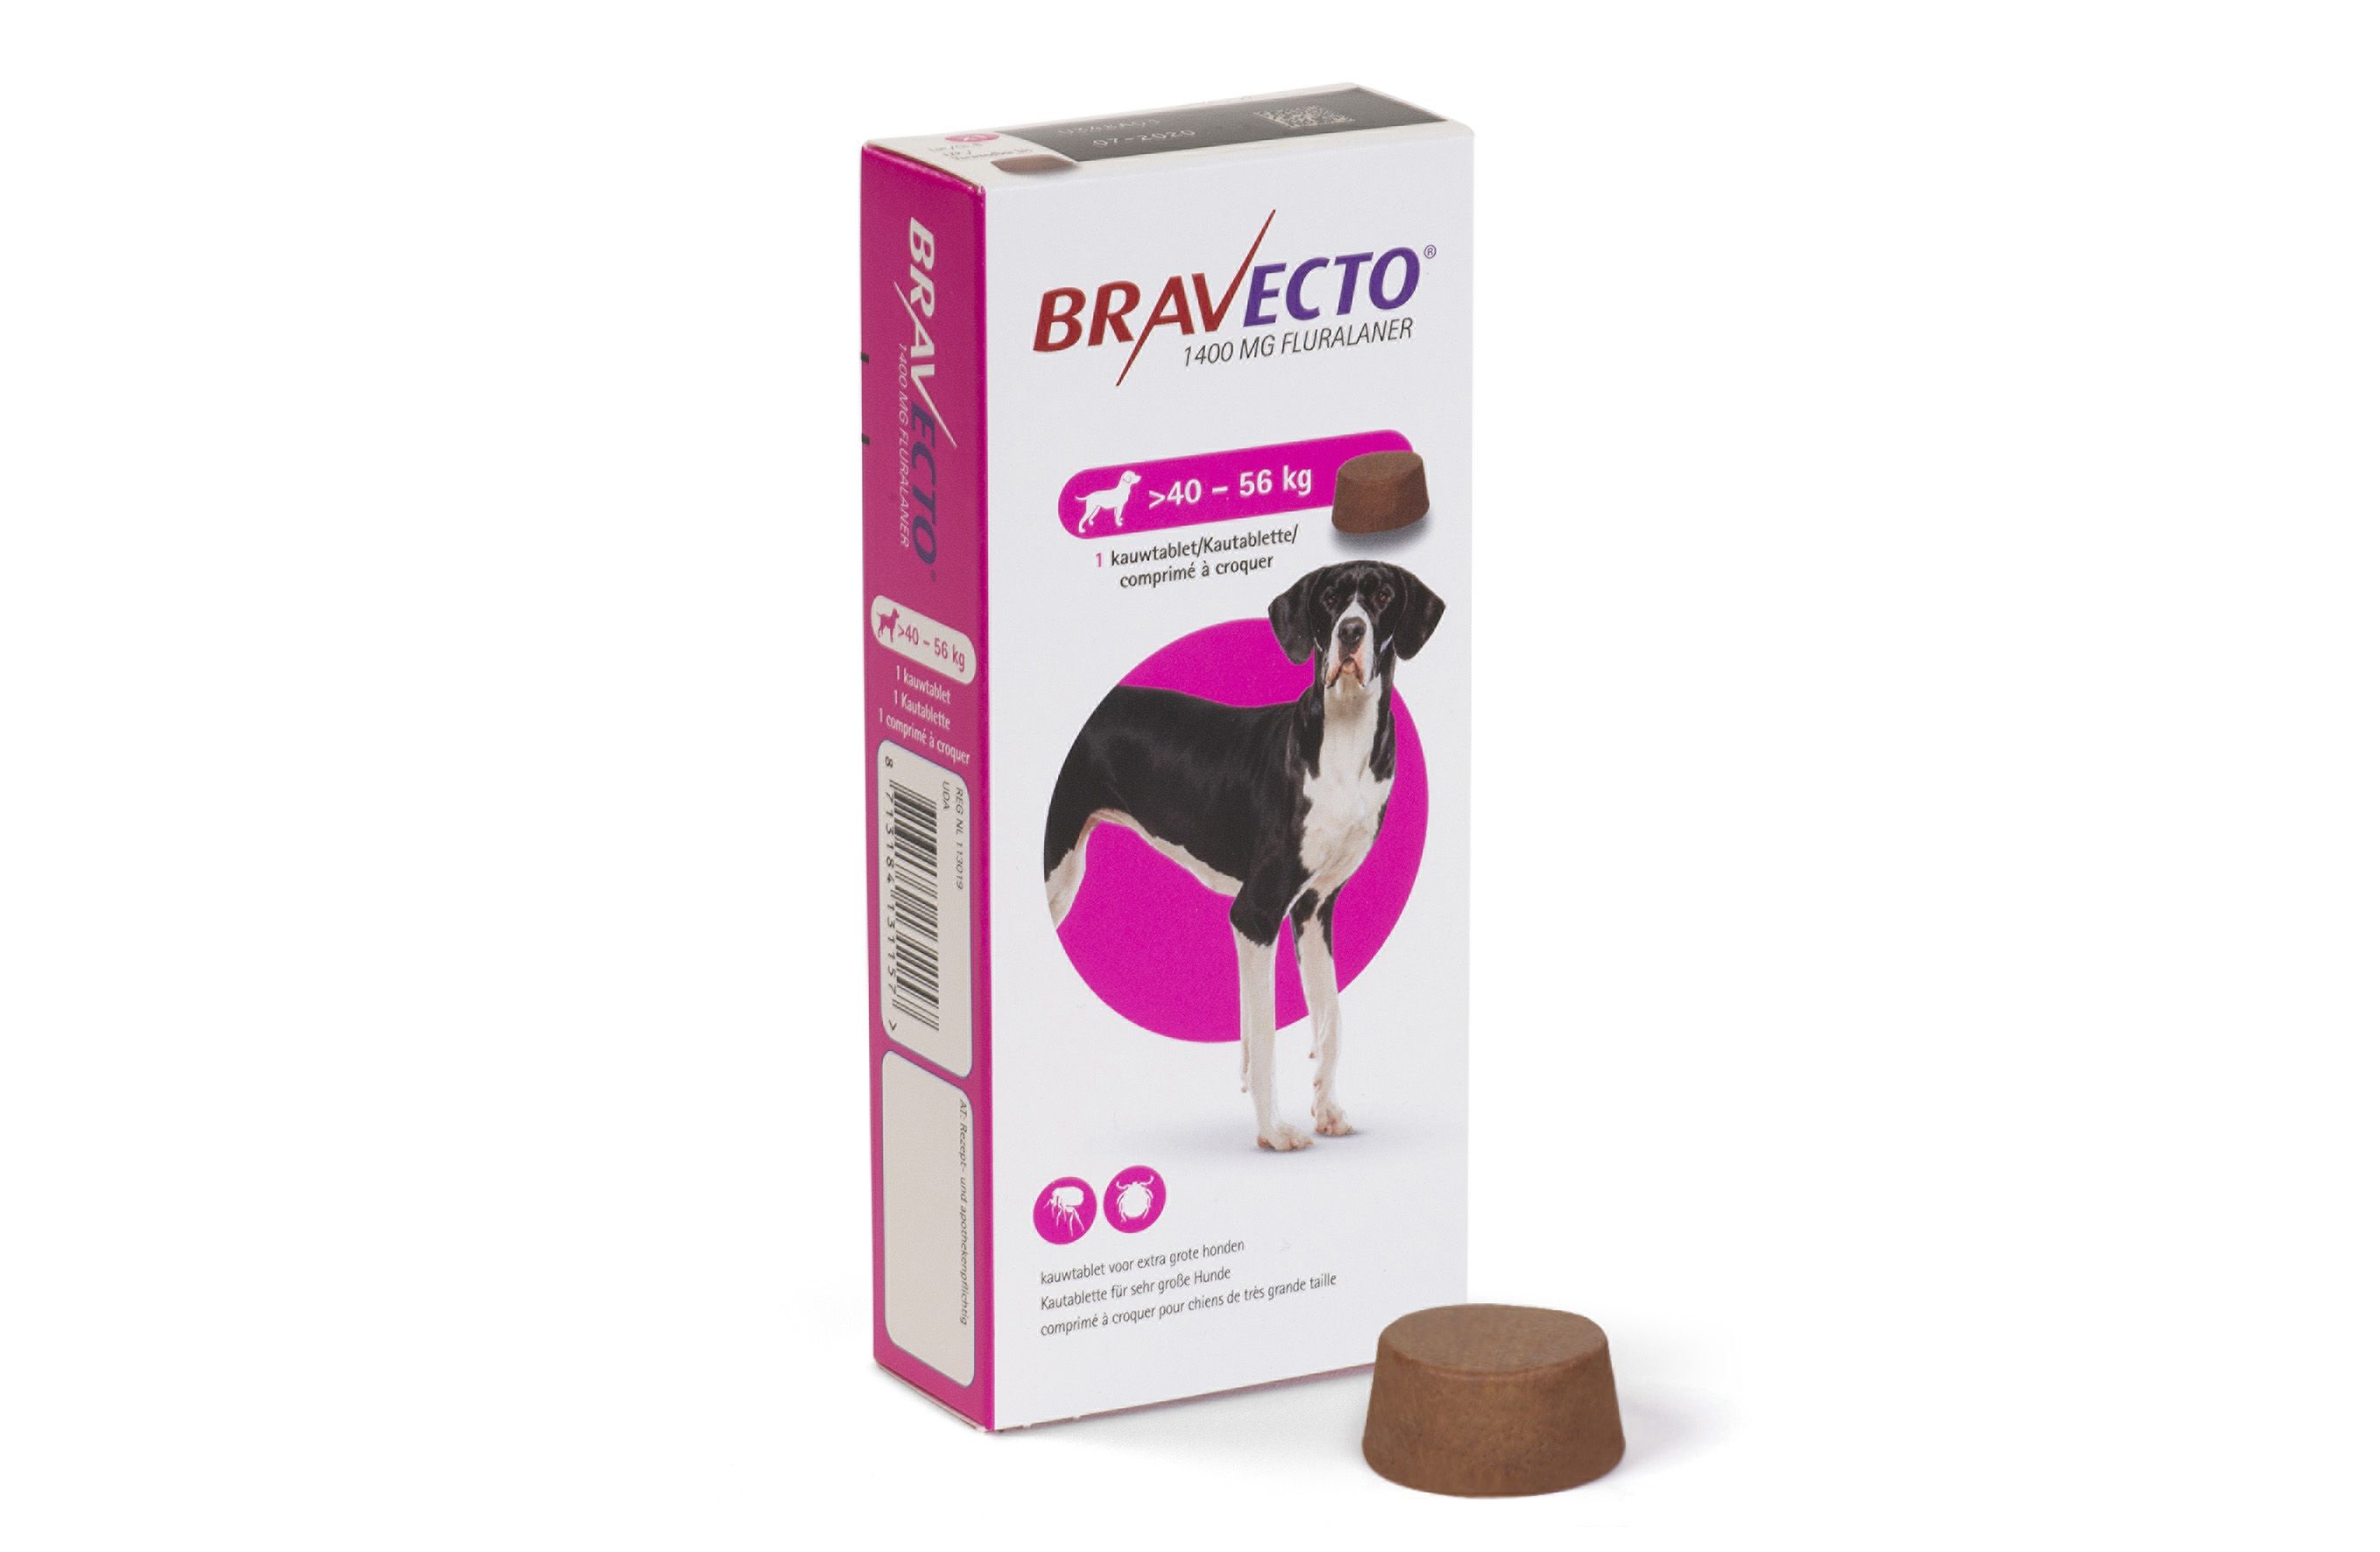 Bravecto для собак 20 40кг. Бравекто (Bravecto) 40-56 кг, таблетка 1400 мг. Бравекто 40-60. Бравекто 1400 мг. Бравекто 40-56.